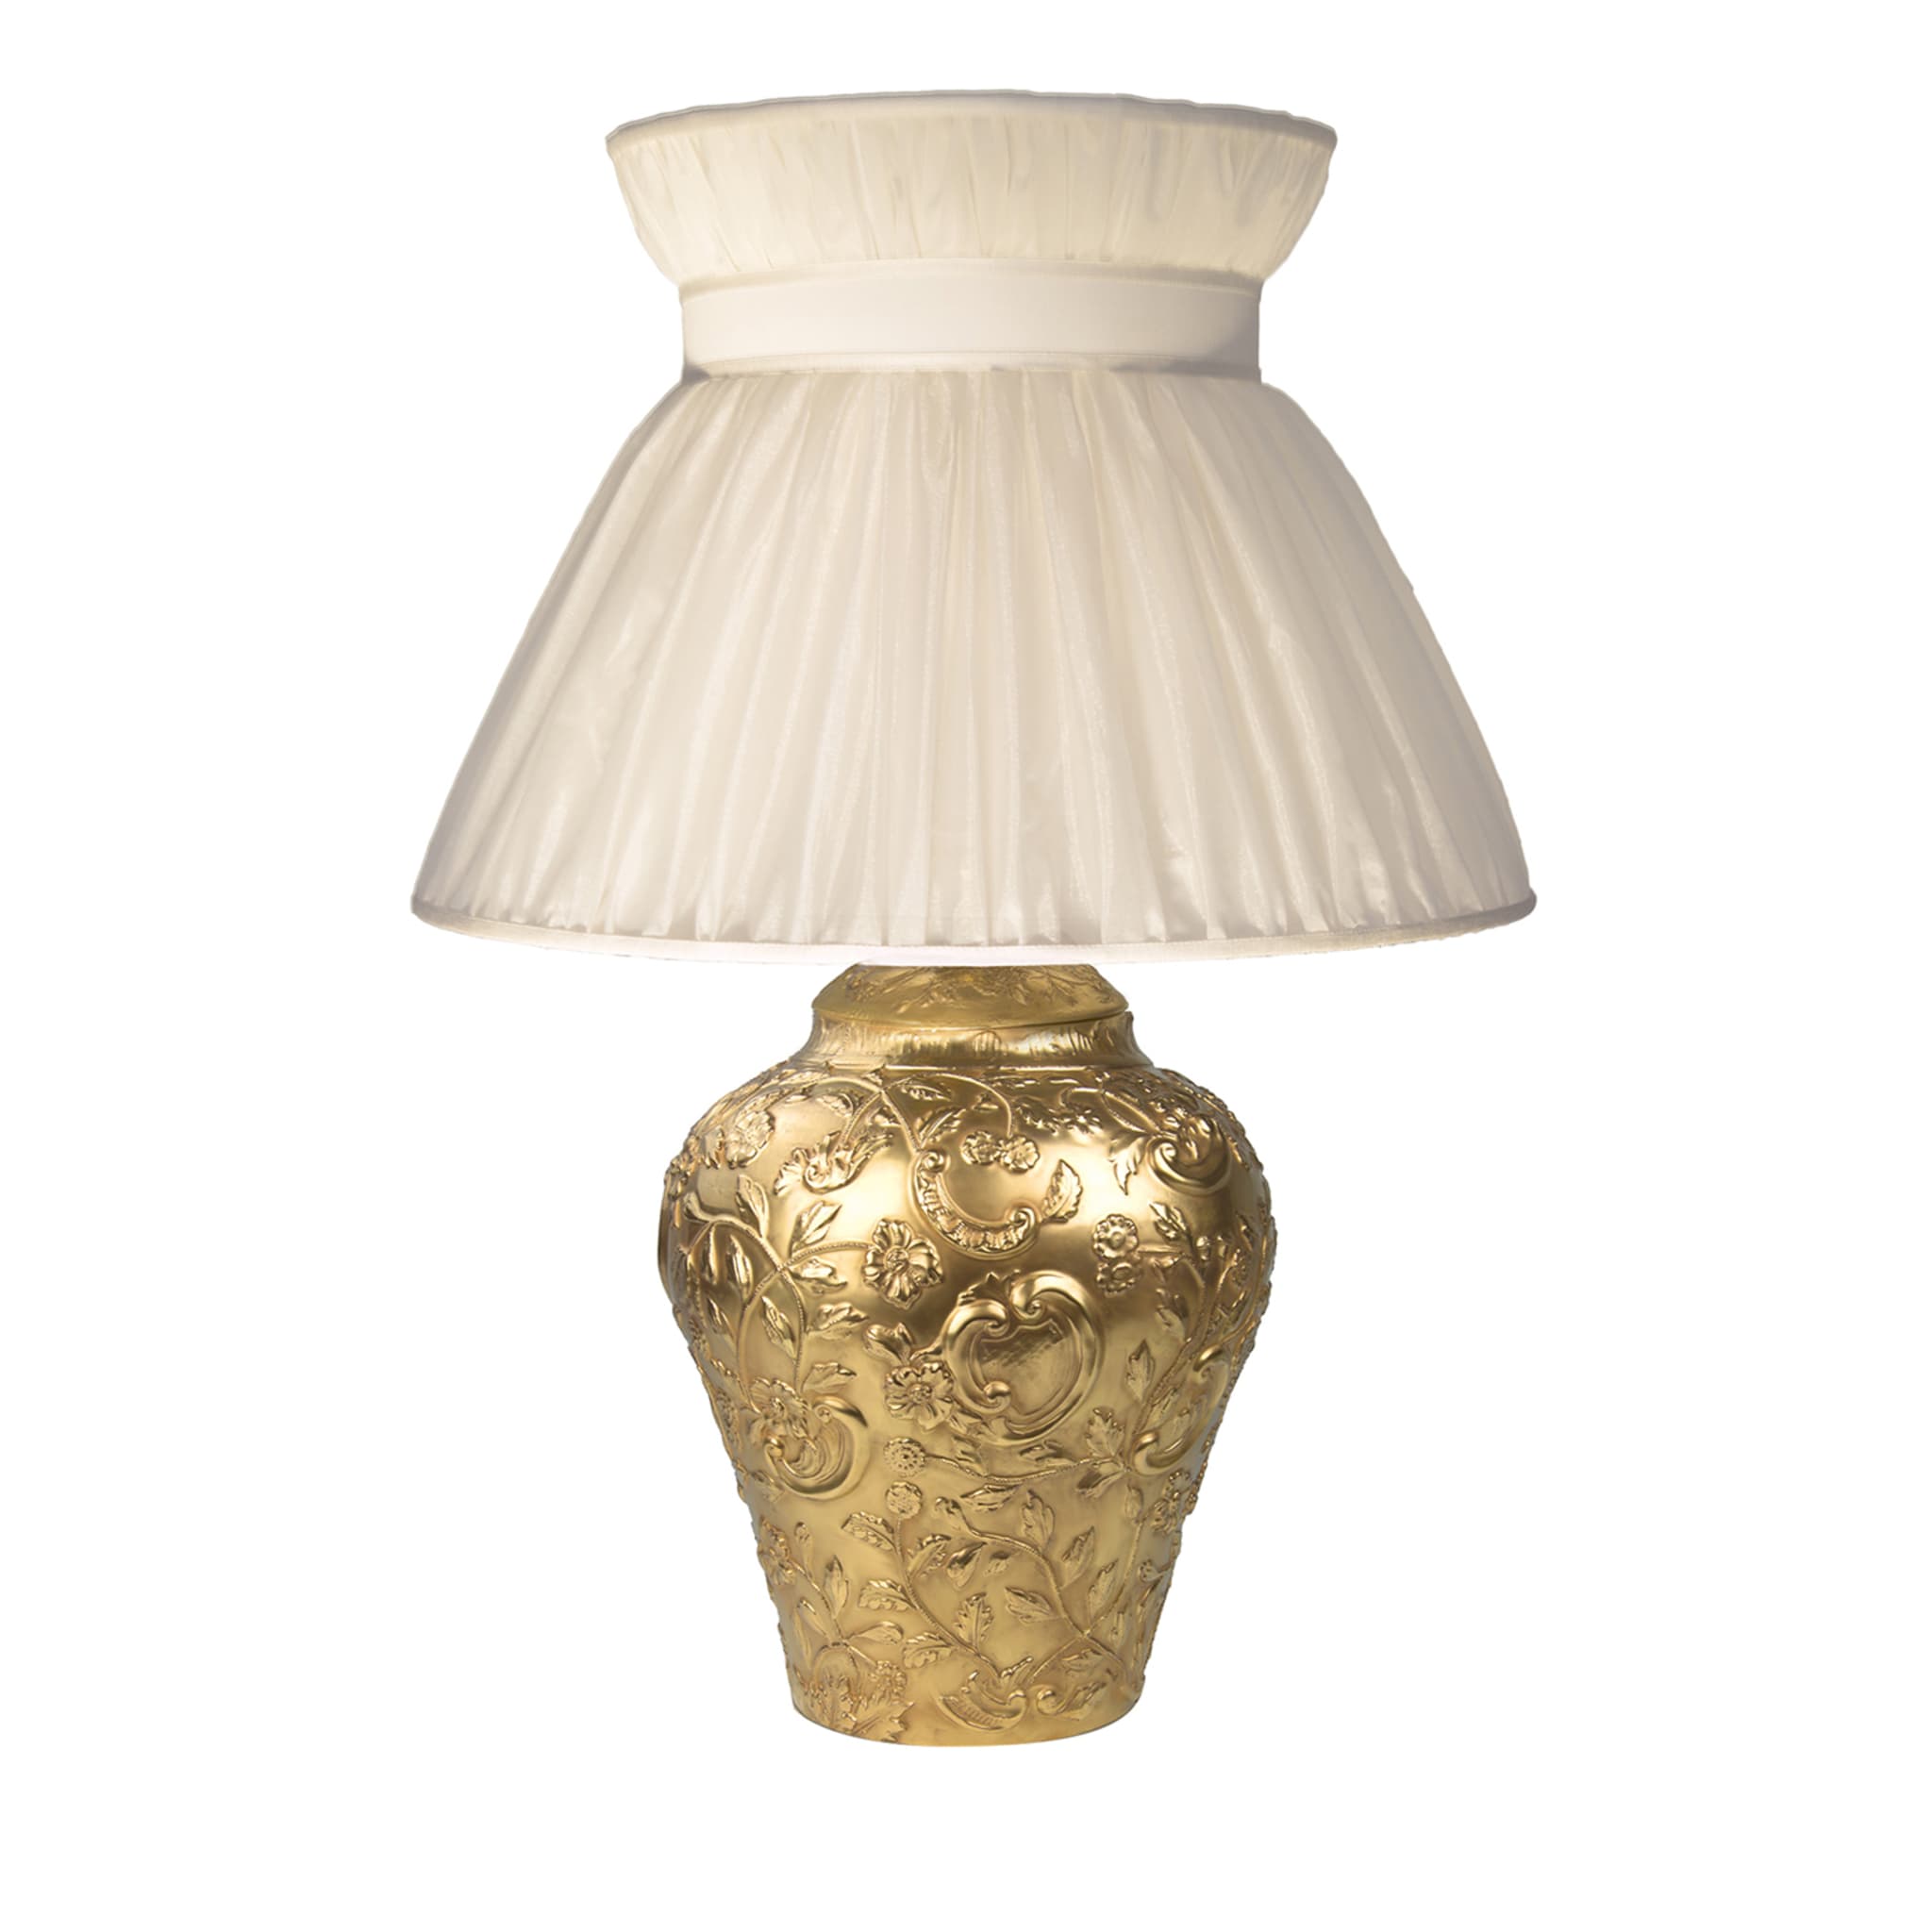 Petite lampe à poser dorée Taormina - Vue principale